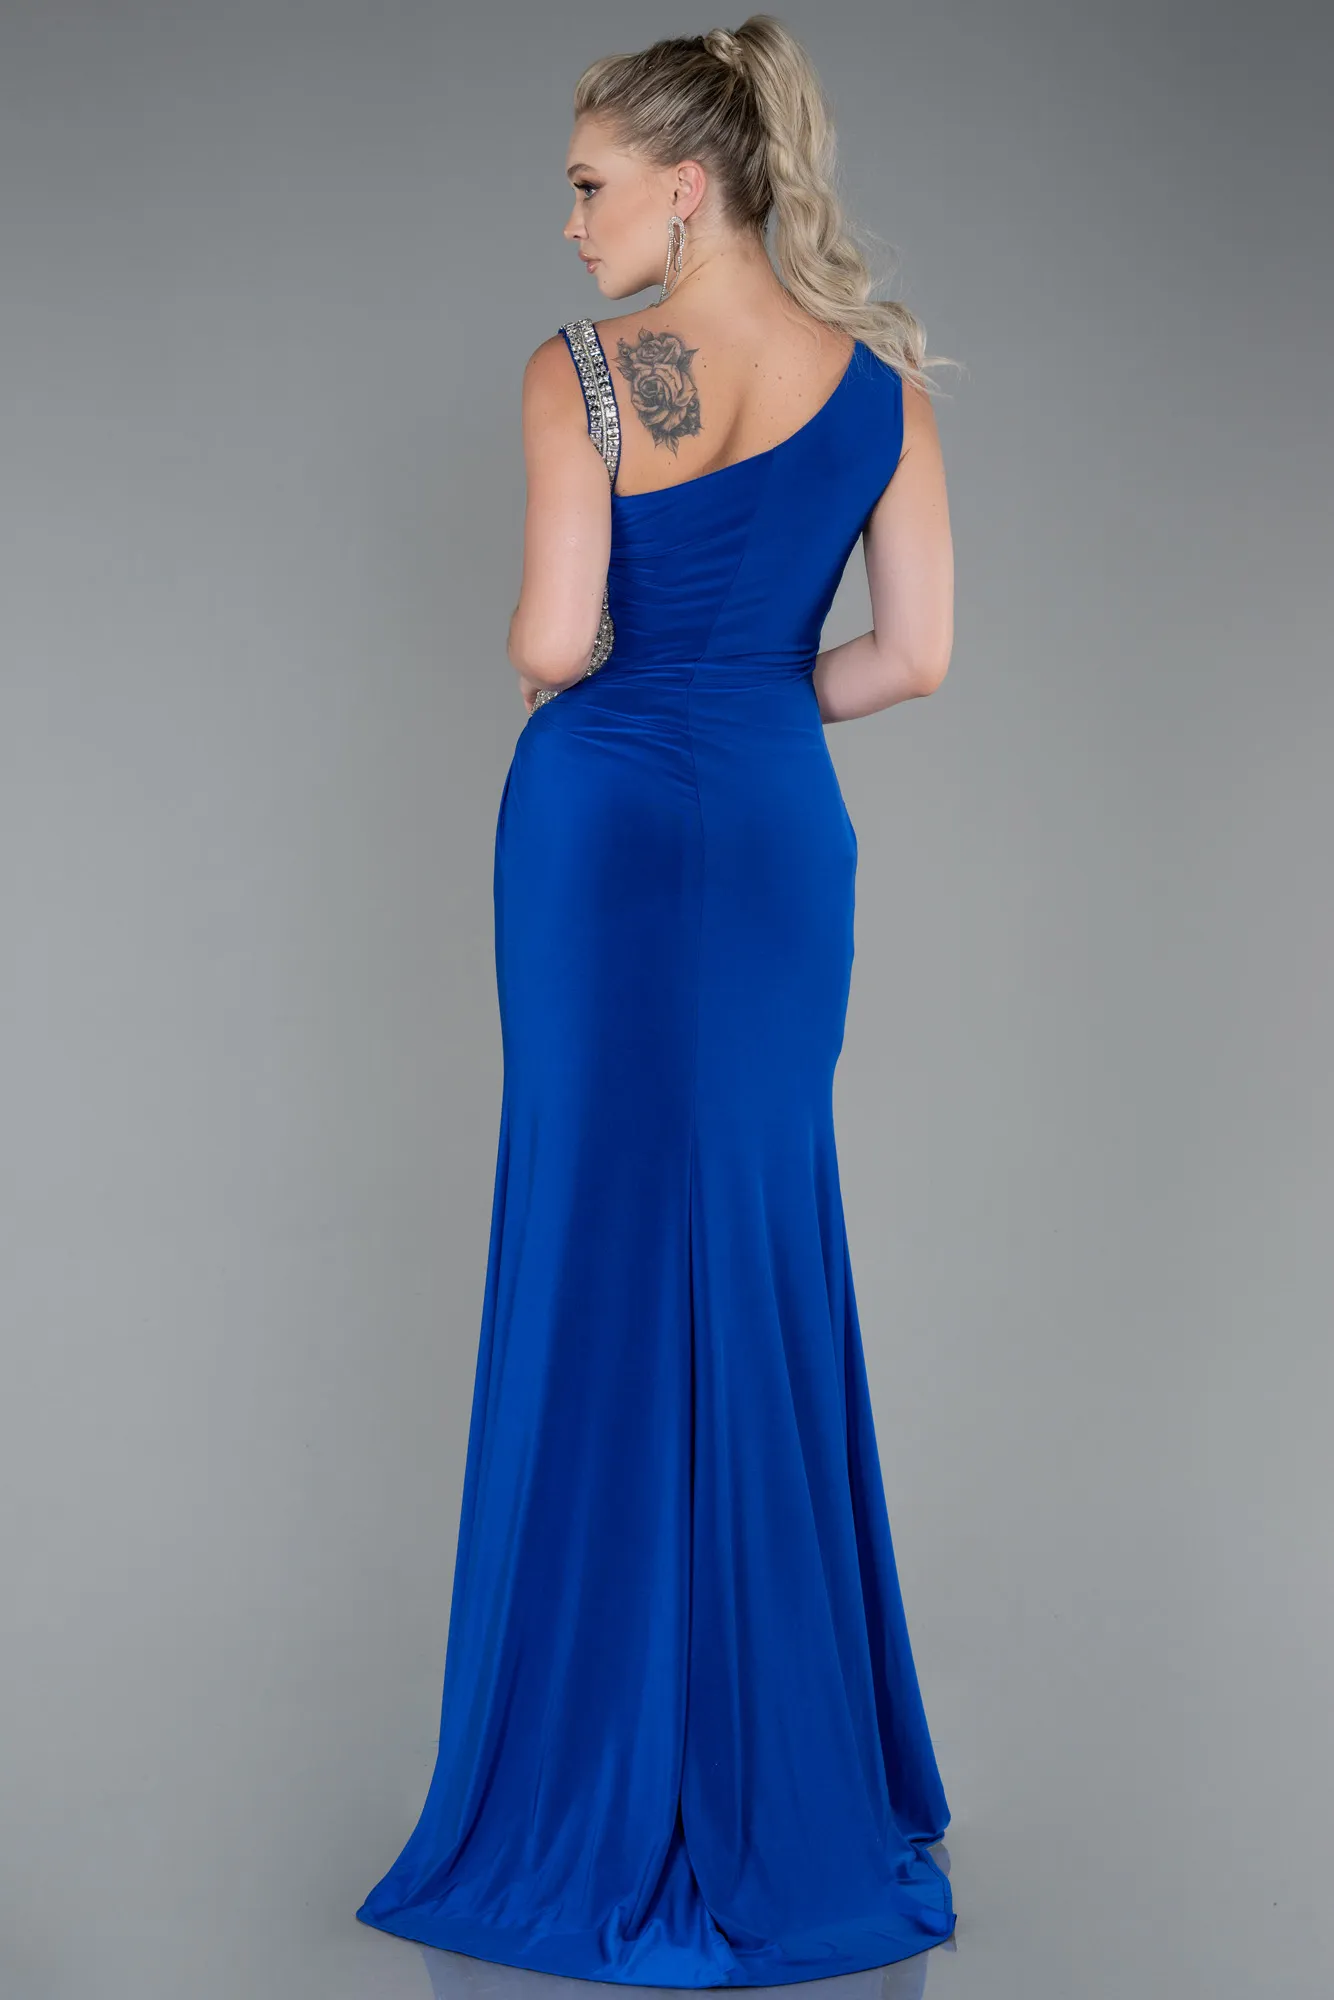 Sax Blue-Long Mermaid Evening Dress ABU3206